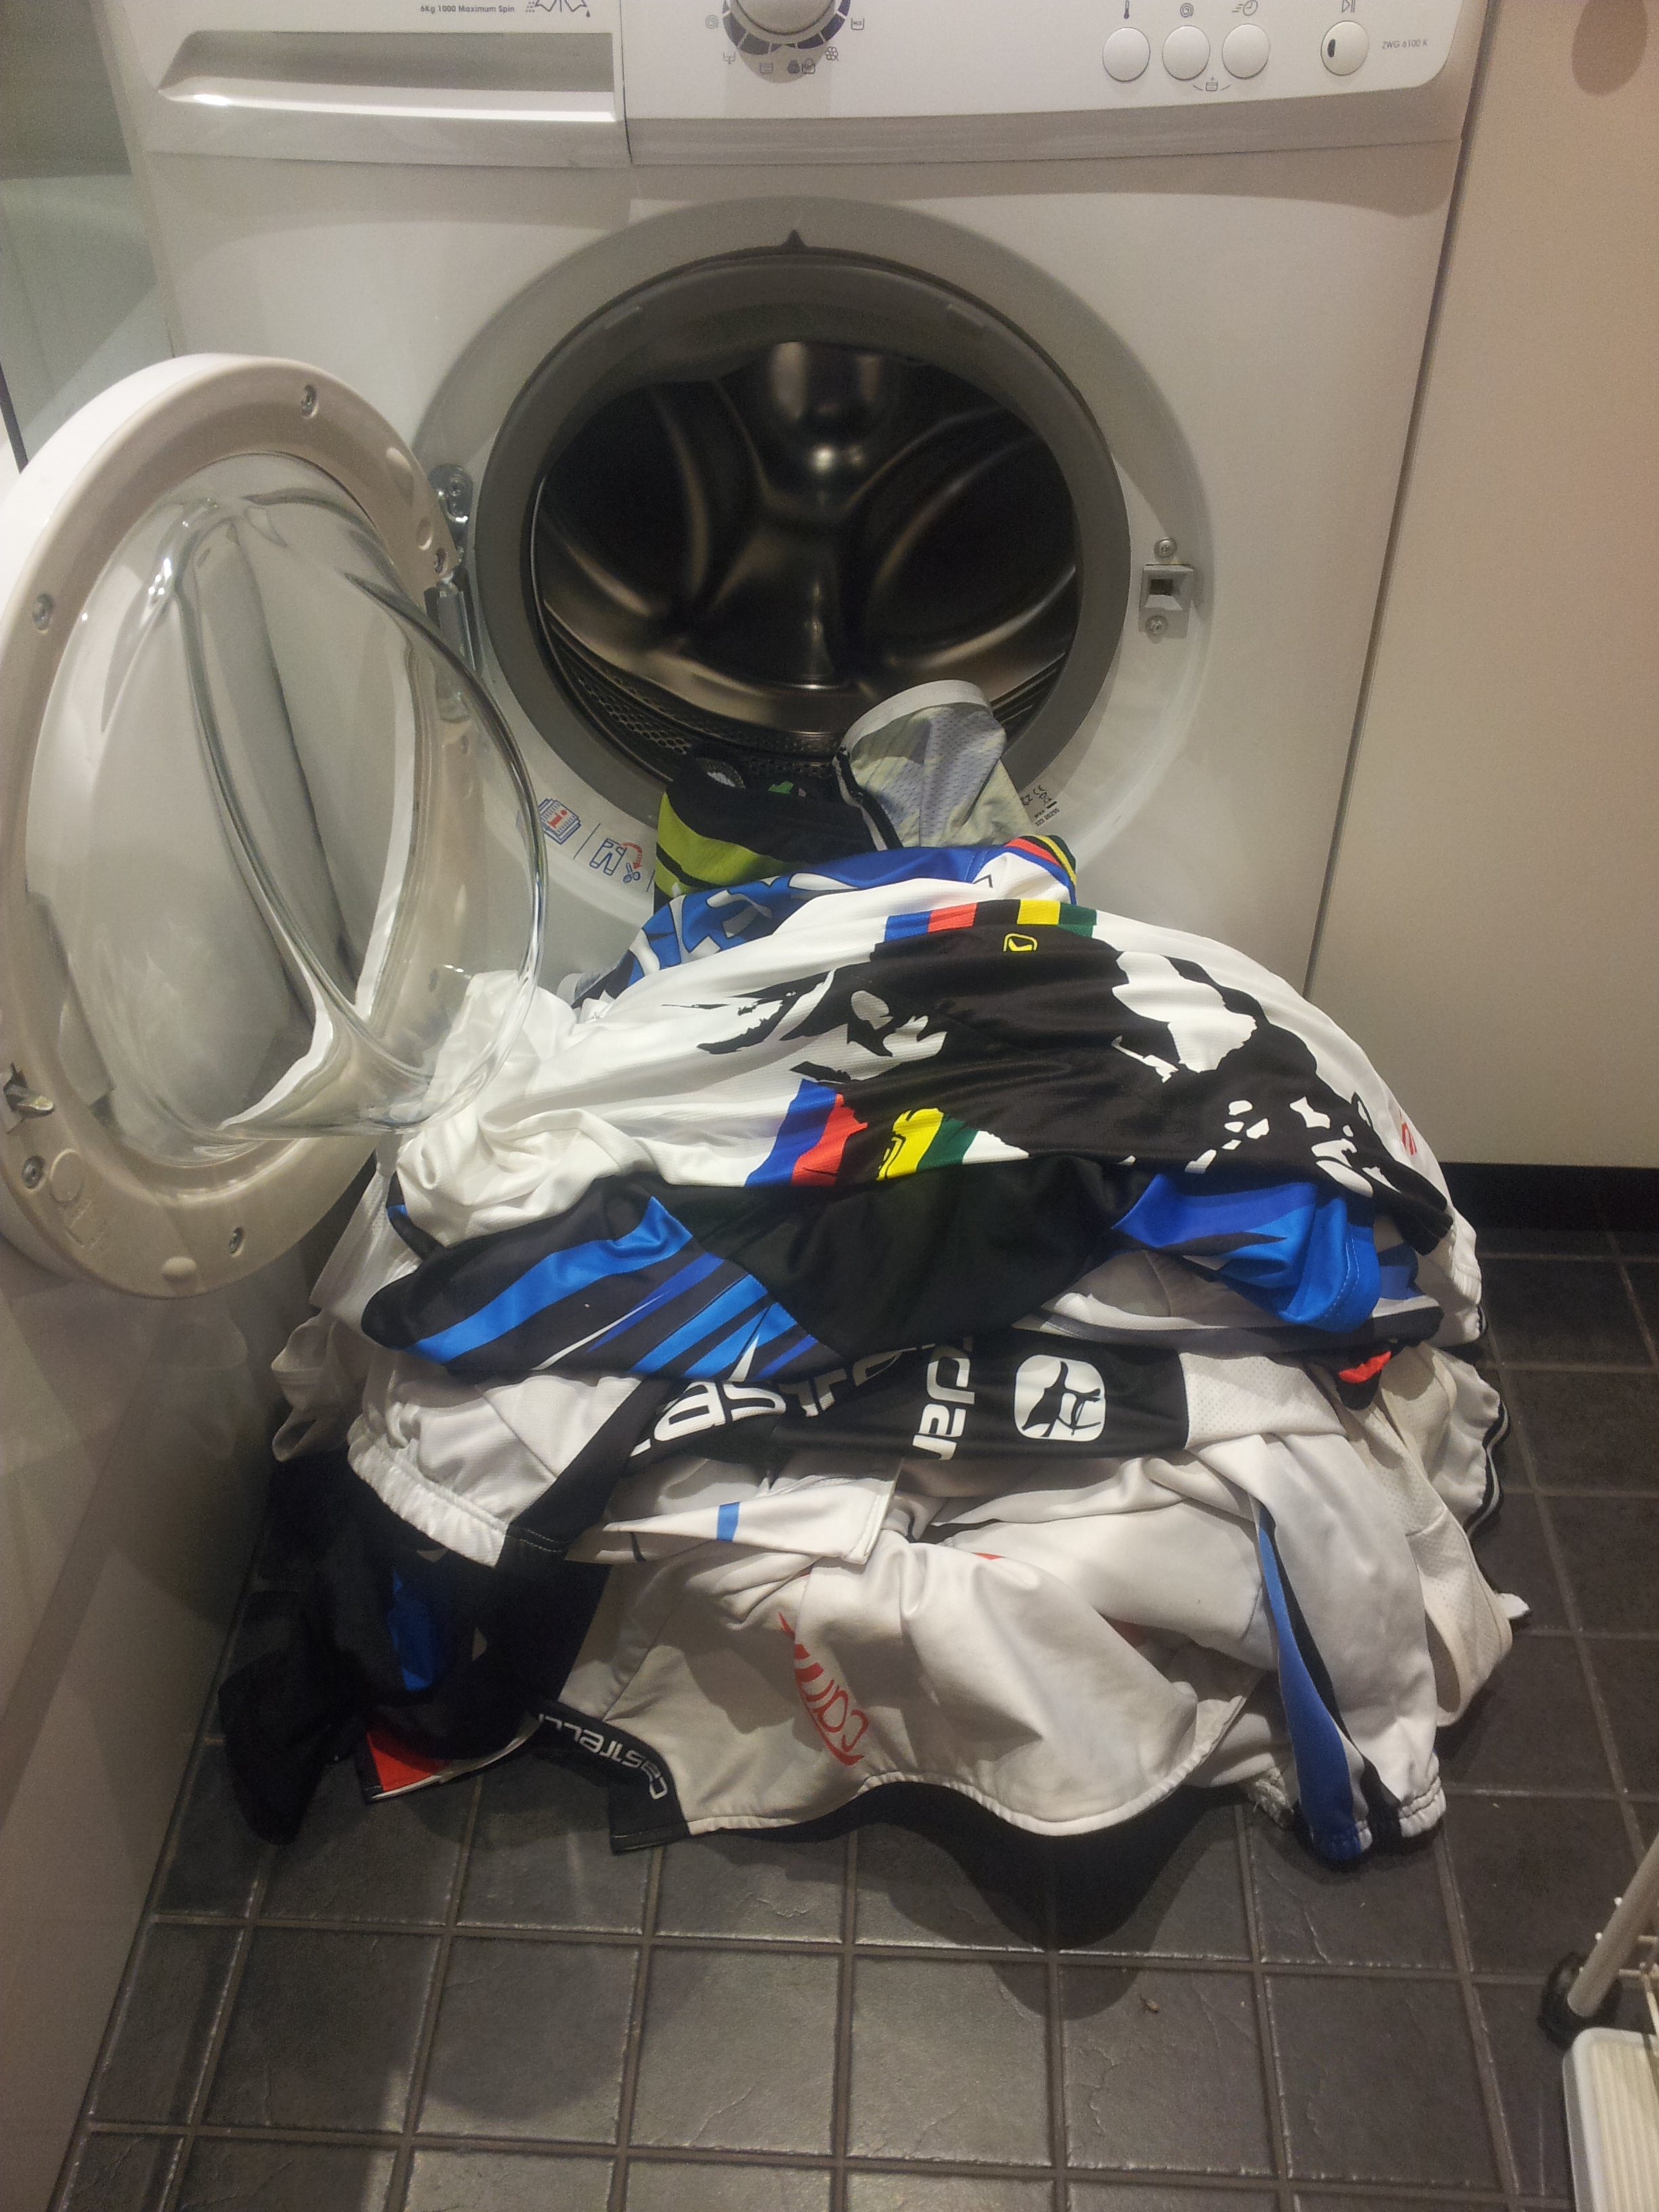 Washing Cycling Clothes